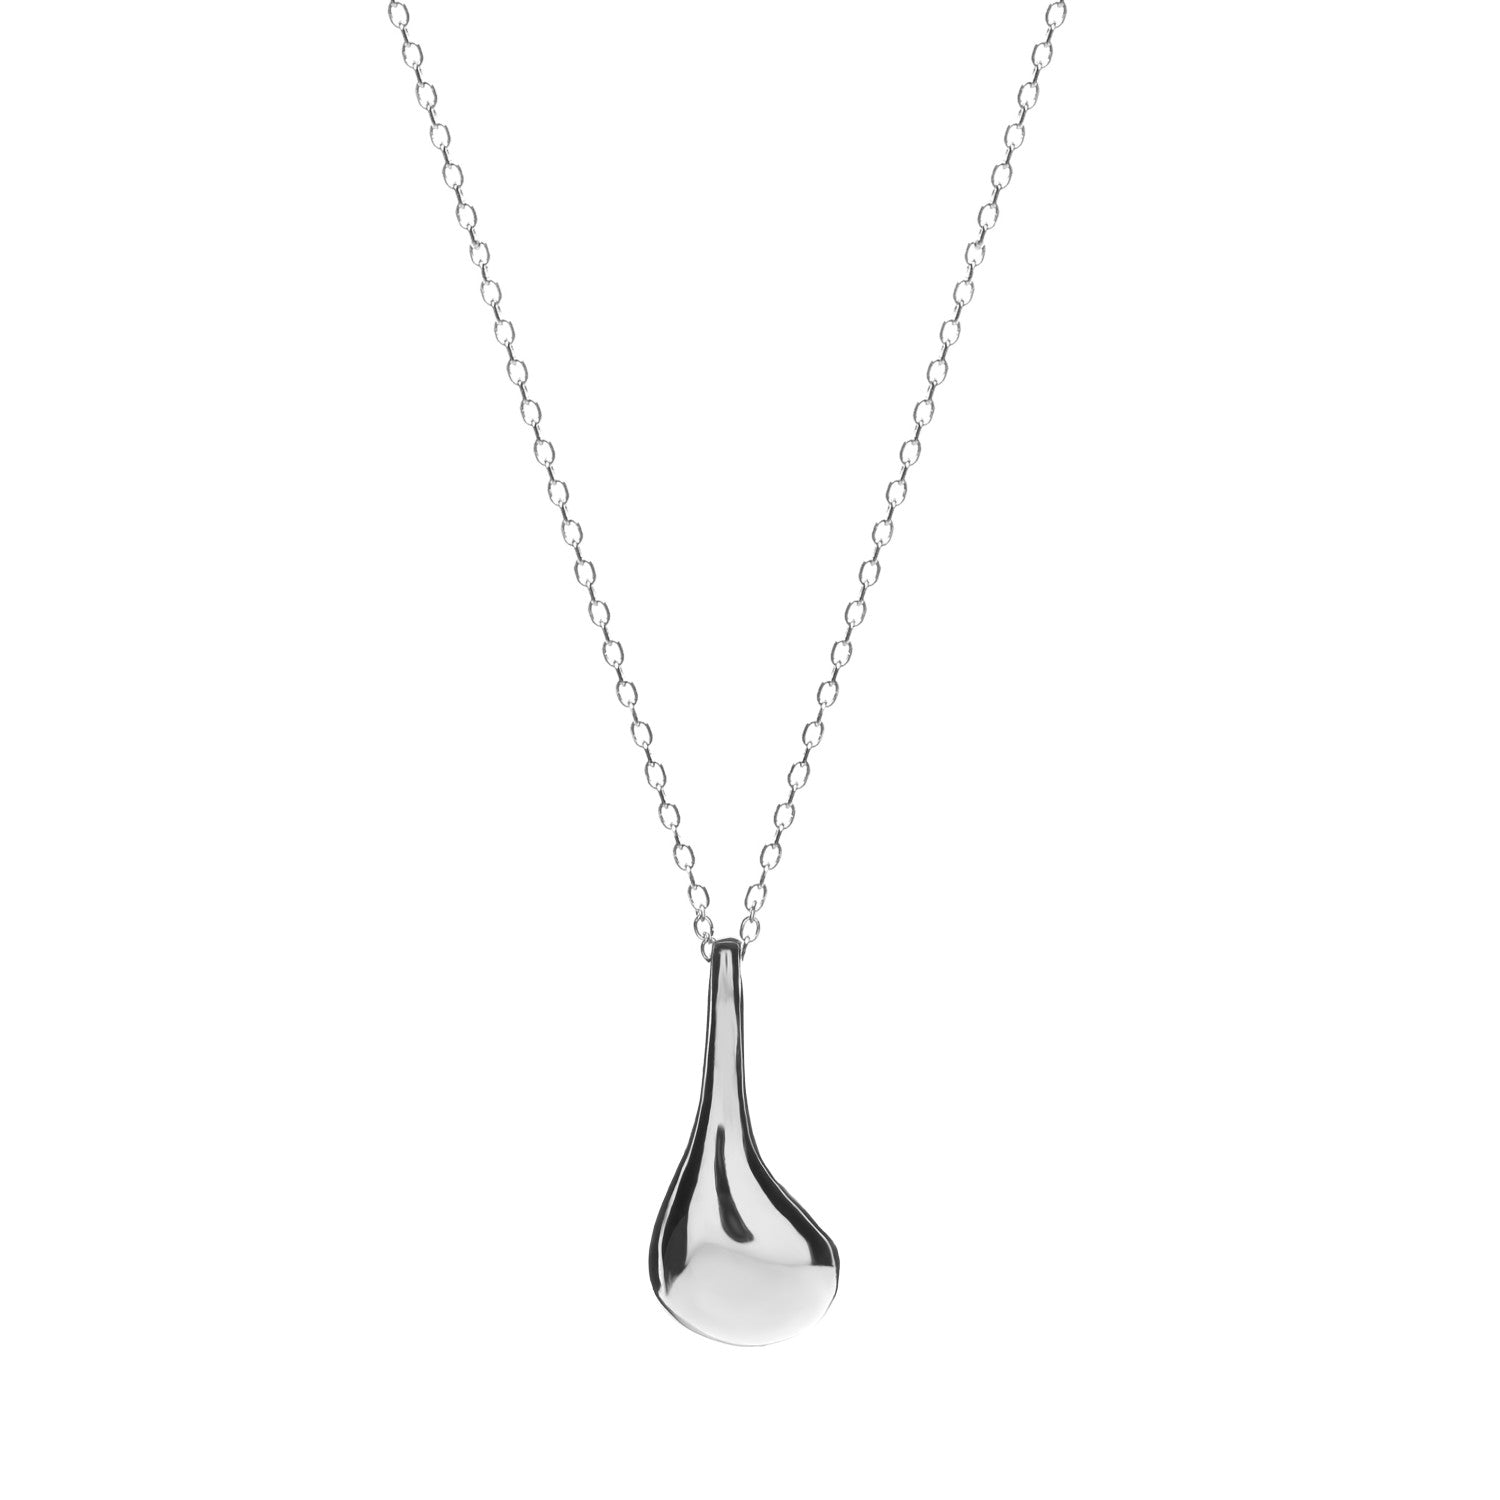 Original silver necklaces with drop-shaped design